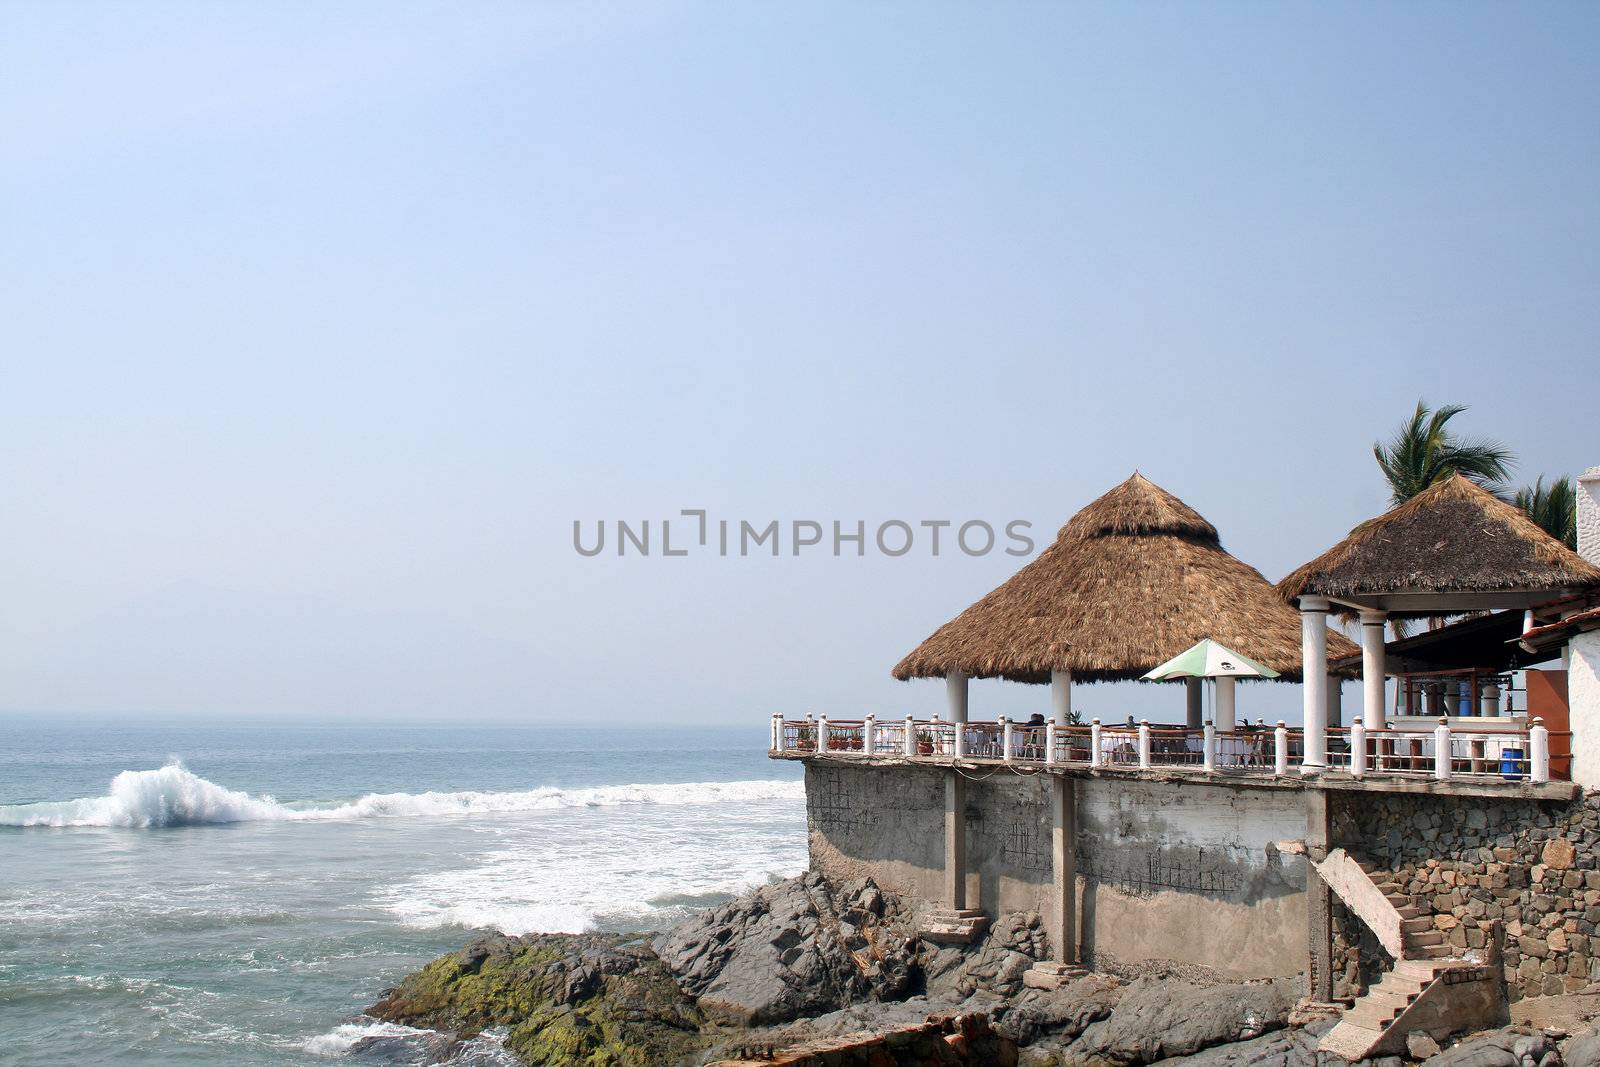 Luxury Resort Hotel Restaurant on the ocean